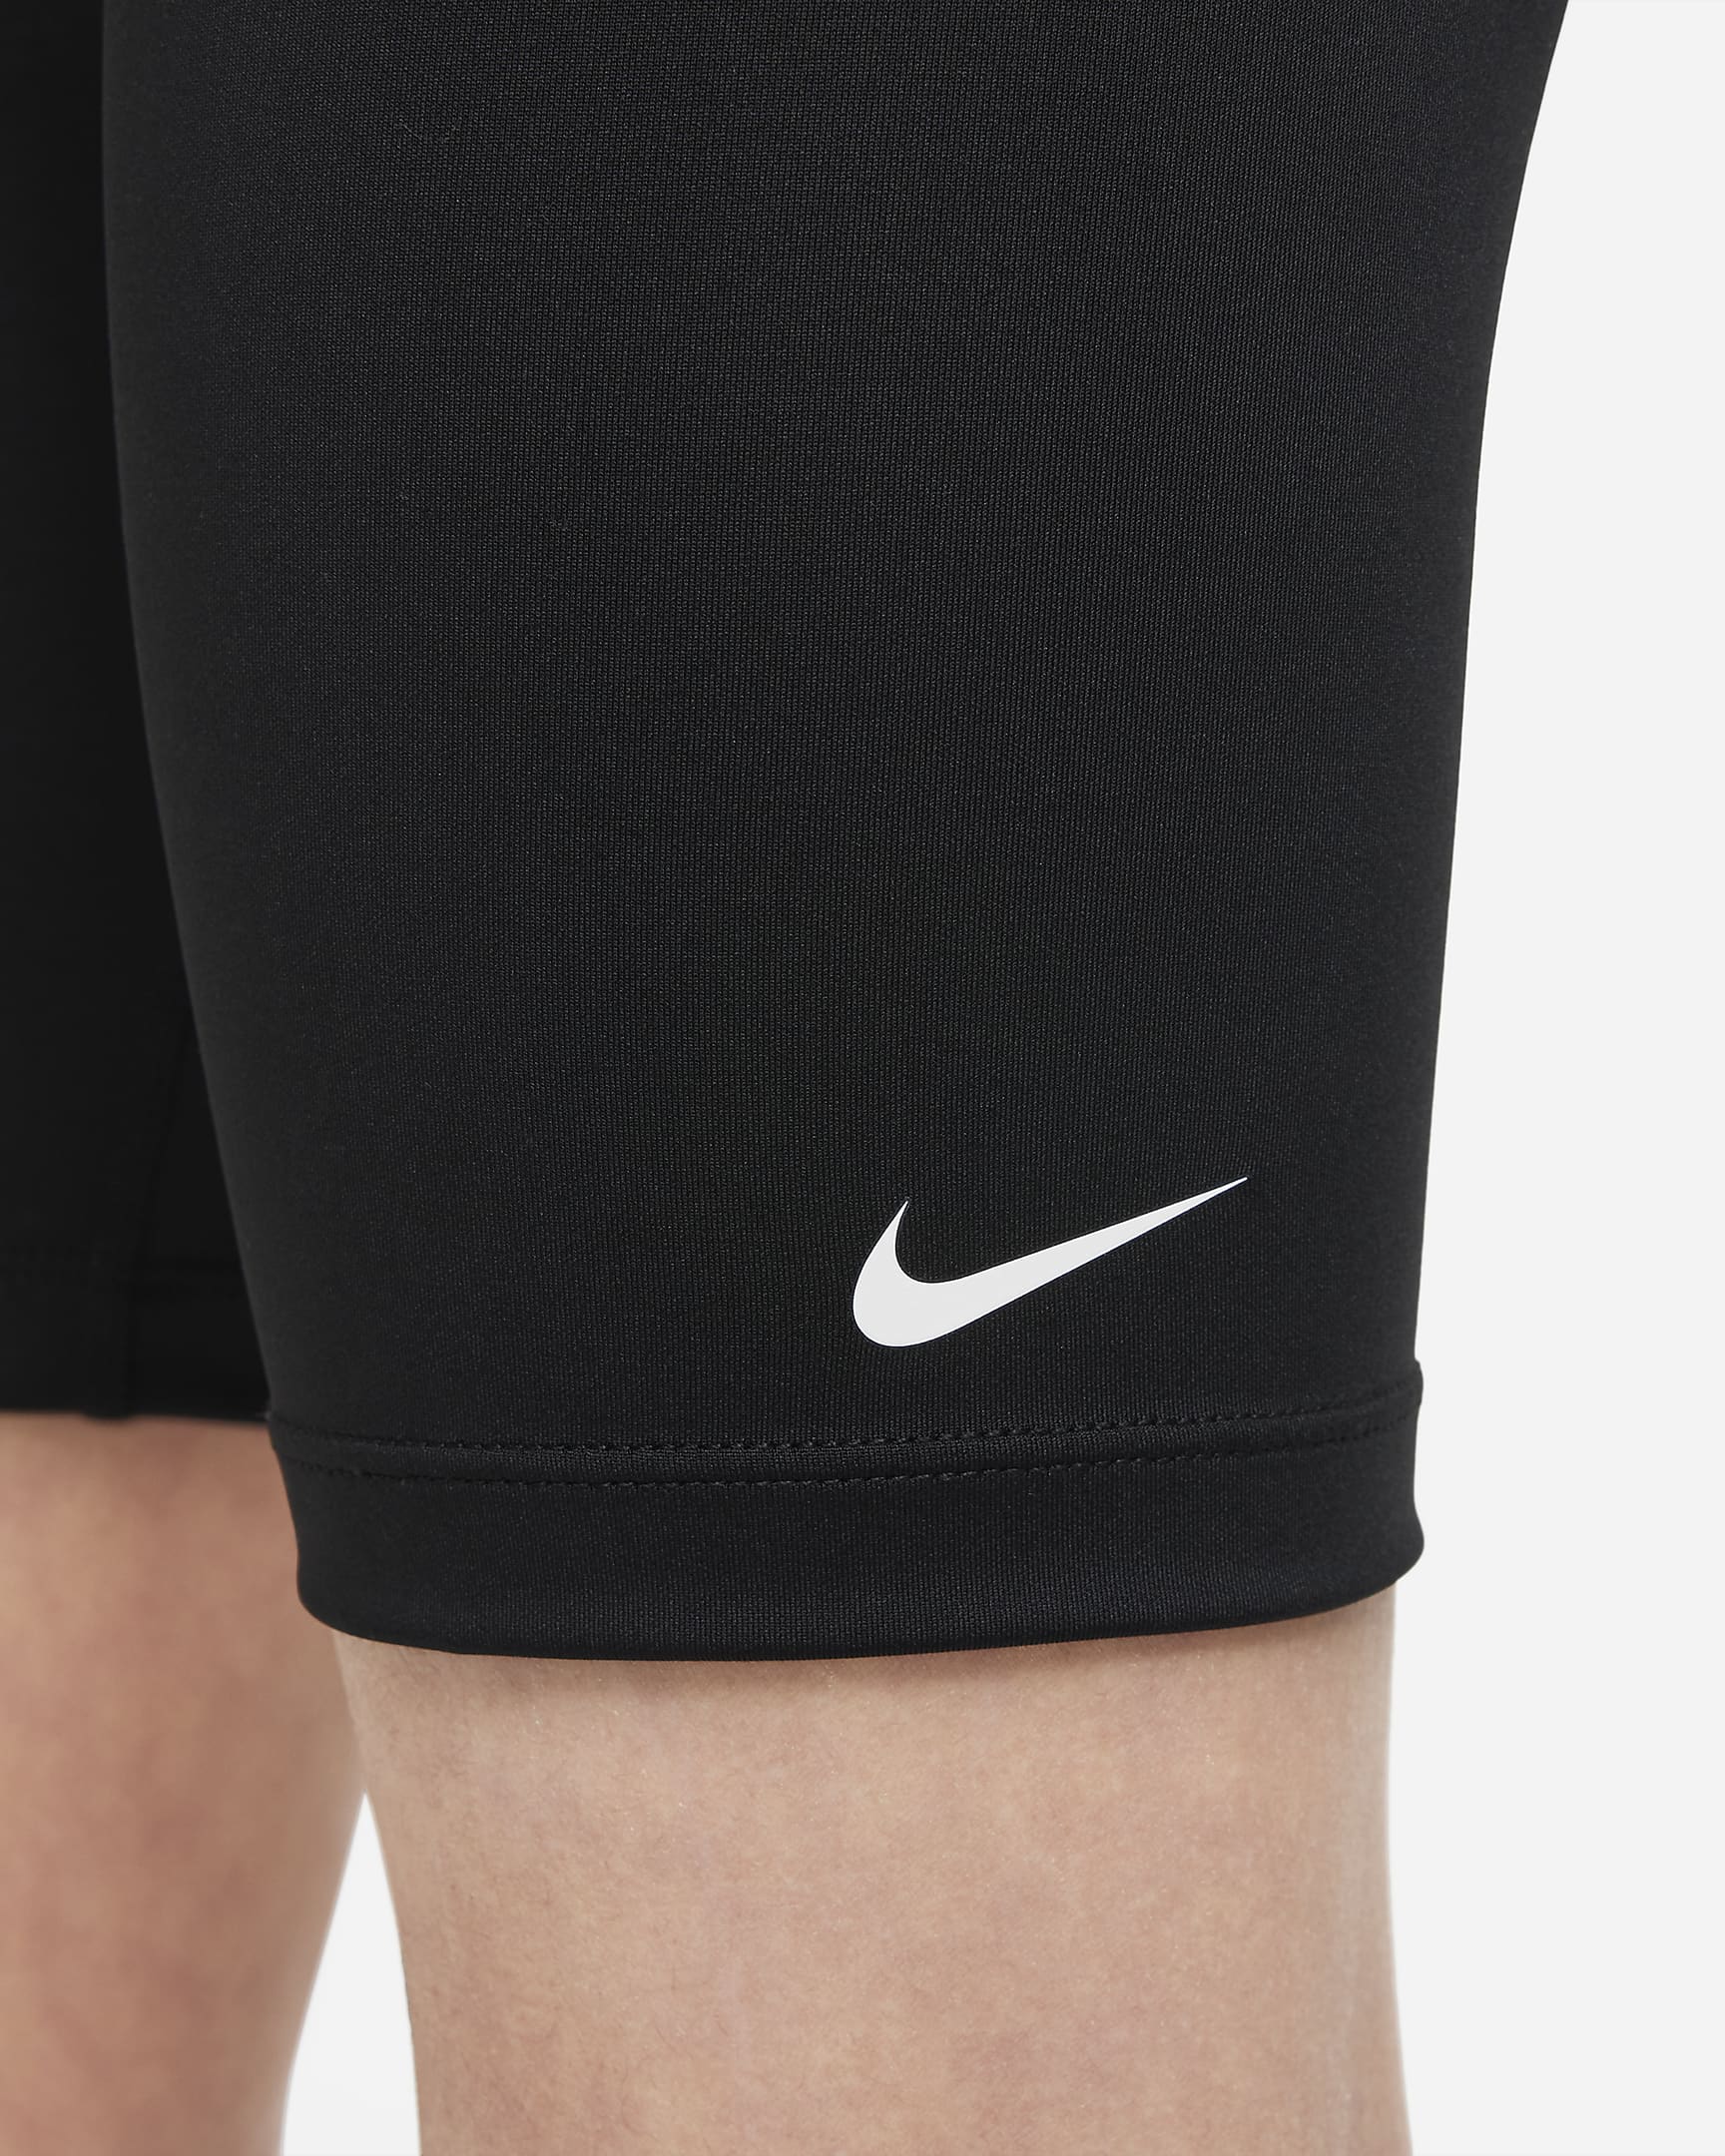 Cycliste Nike One pour ado (fille) - Noir/Blanc